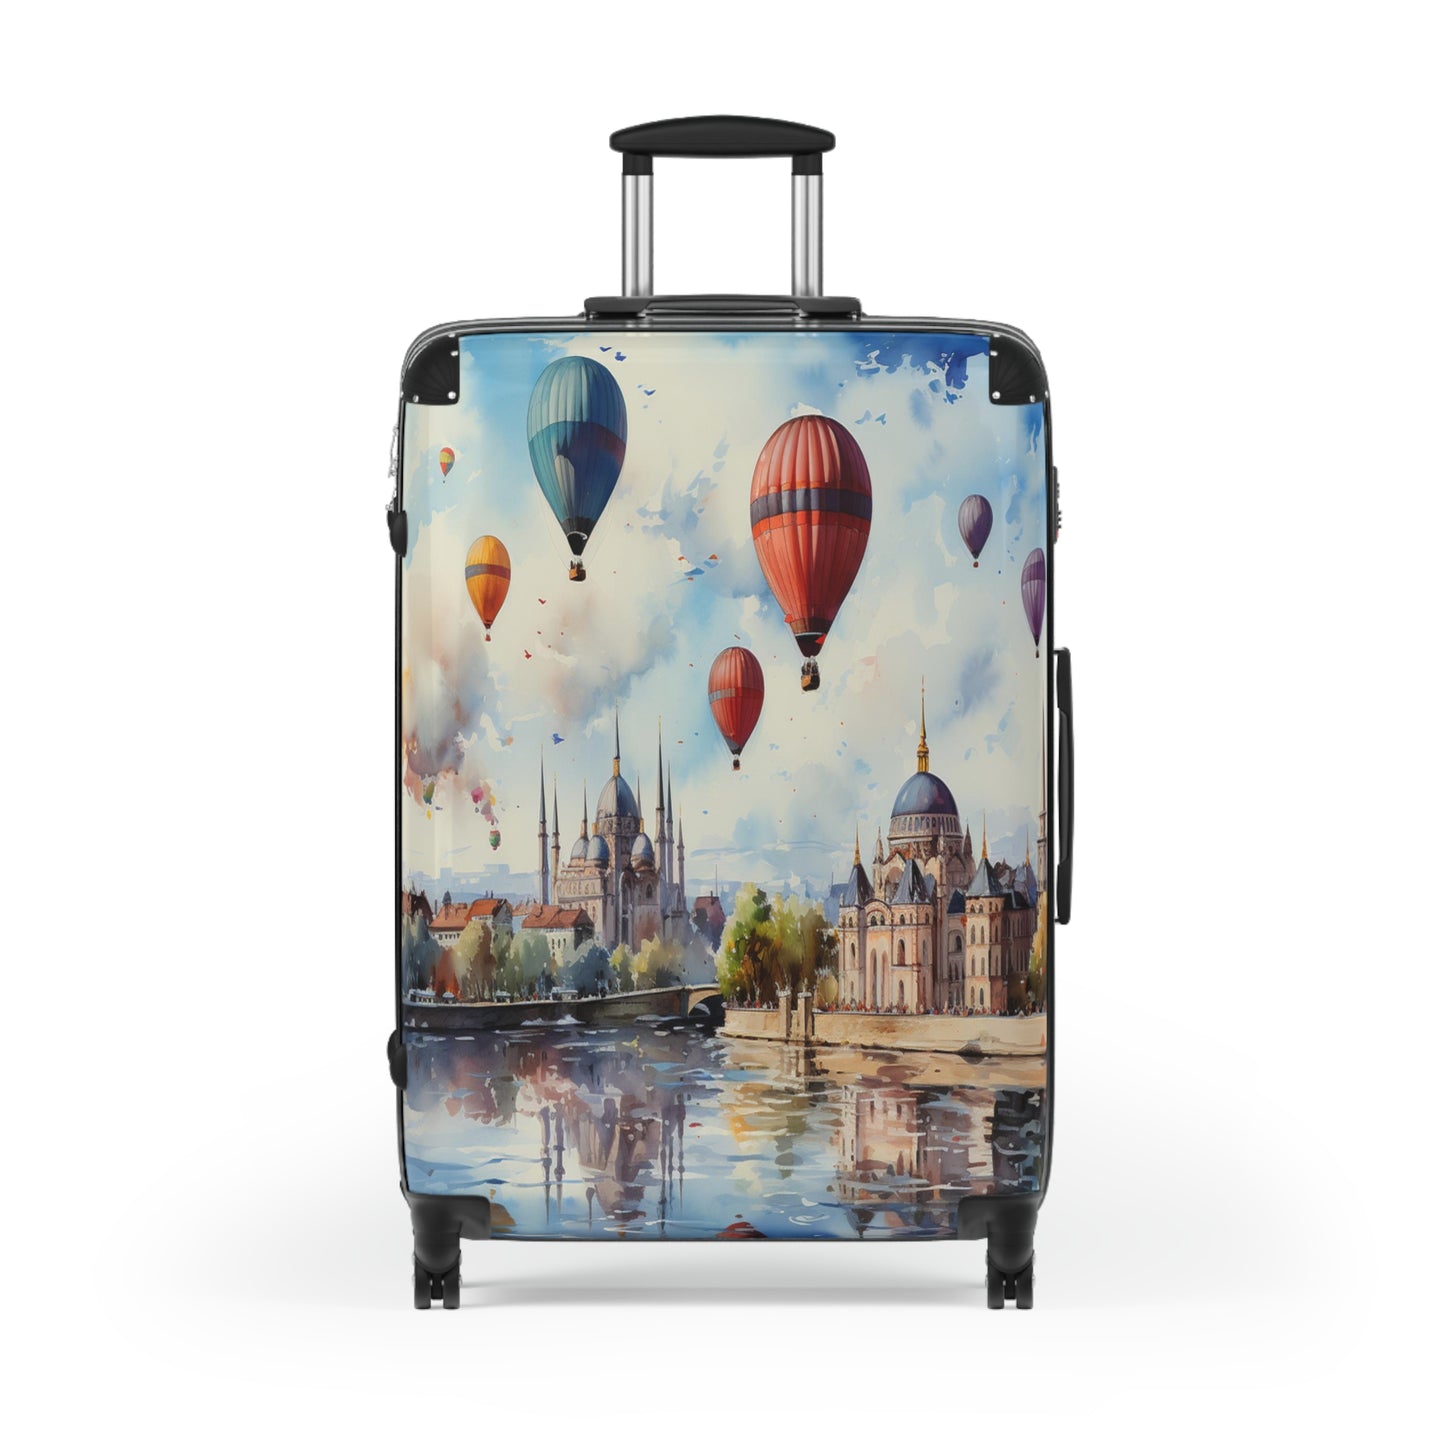 Cappadocia Skies Luggage | Turkey | Travel Luggage | Christmas vacation | Unique Christmas gift | Suitcase